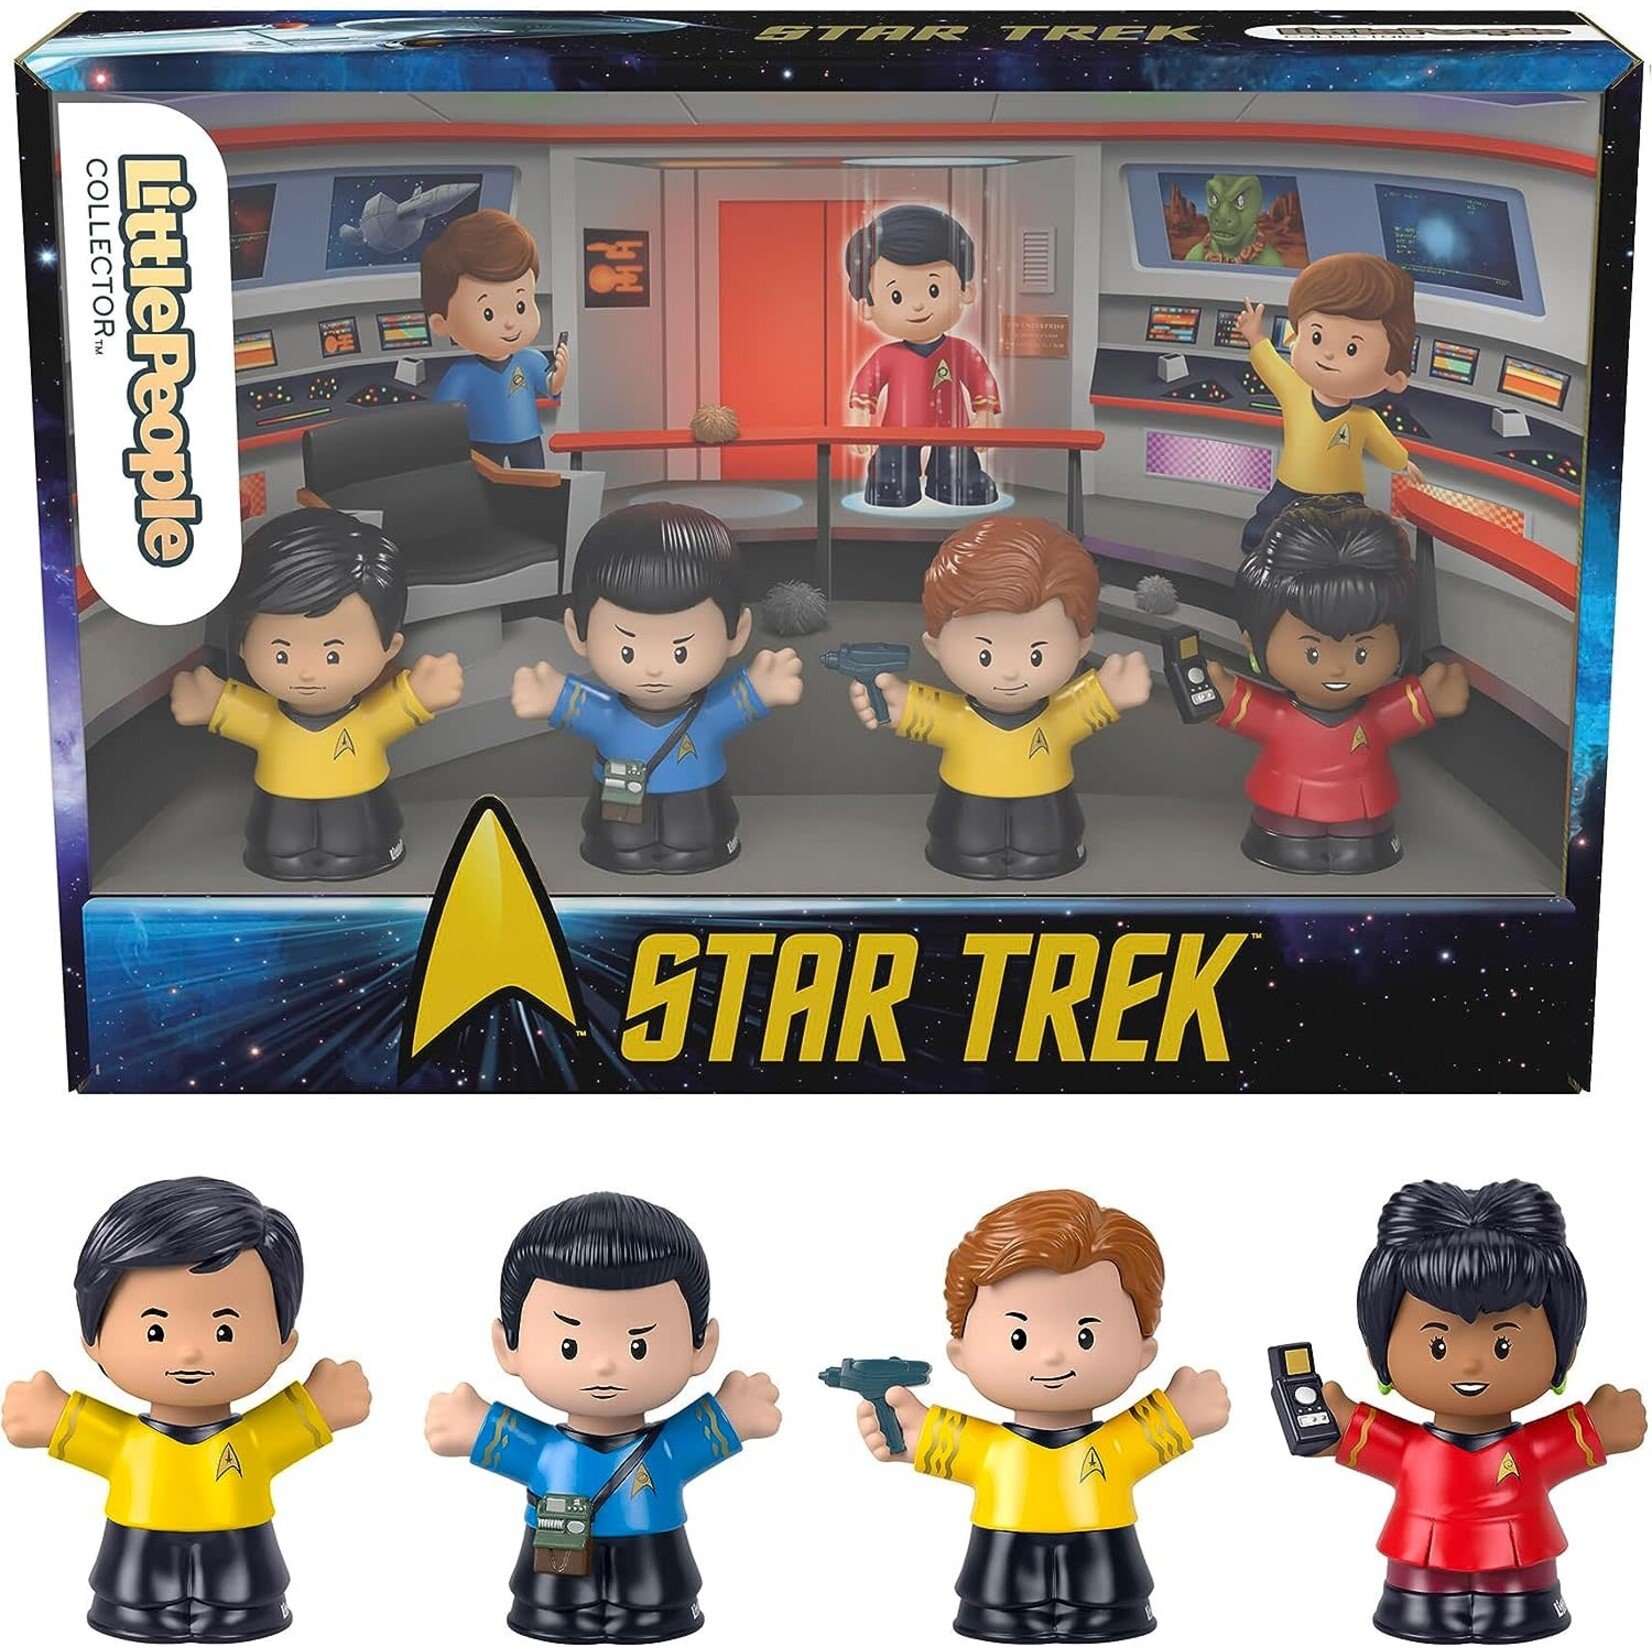 Star Trek Little People Collector Set